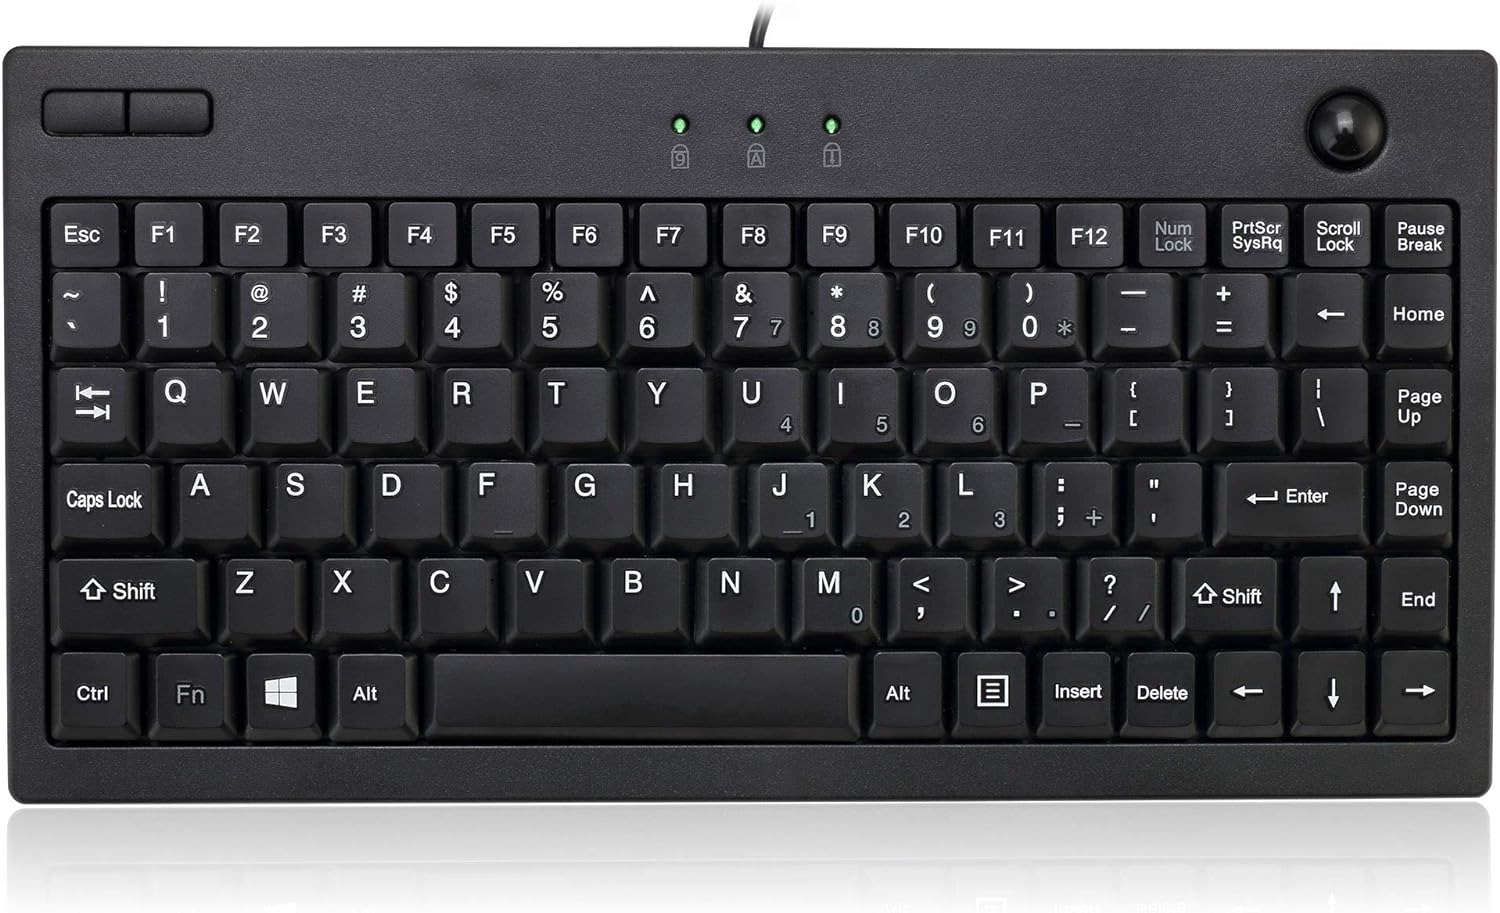 Adesso AKB-310UB - Mini Trackball USB Keyboard, Black